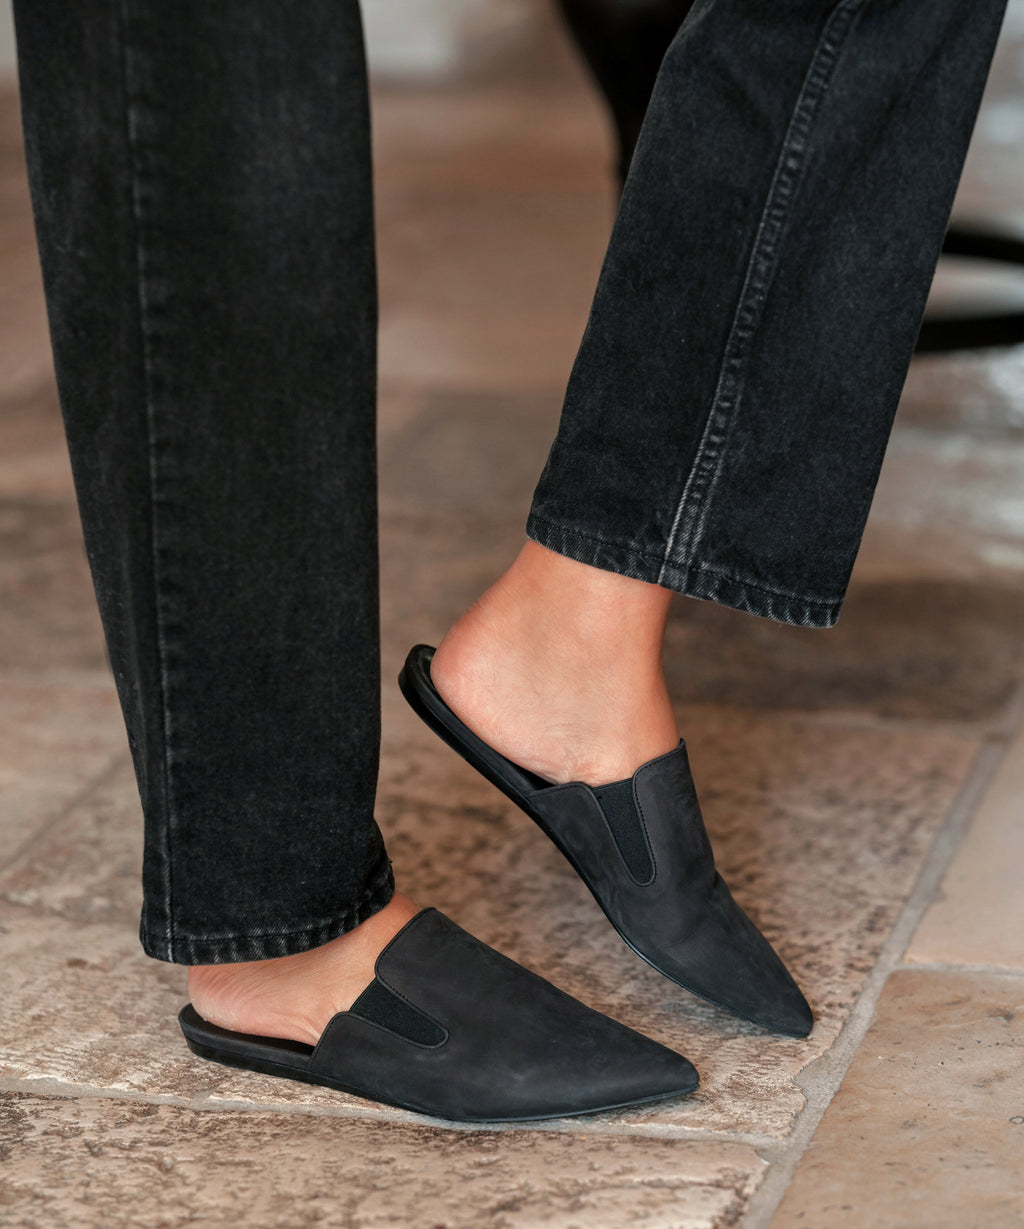 Jenni Kayne Women's Oiled Leather Kitten Heel Mule Size 40